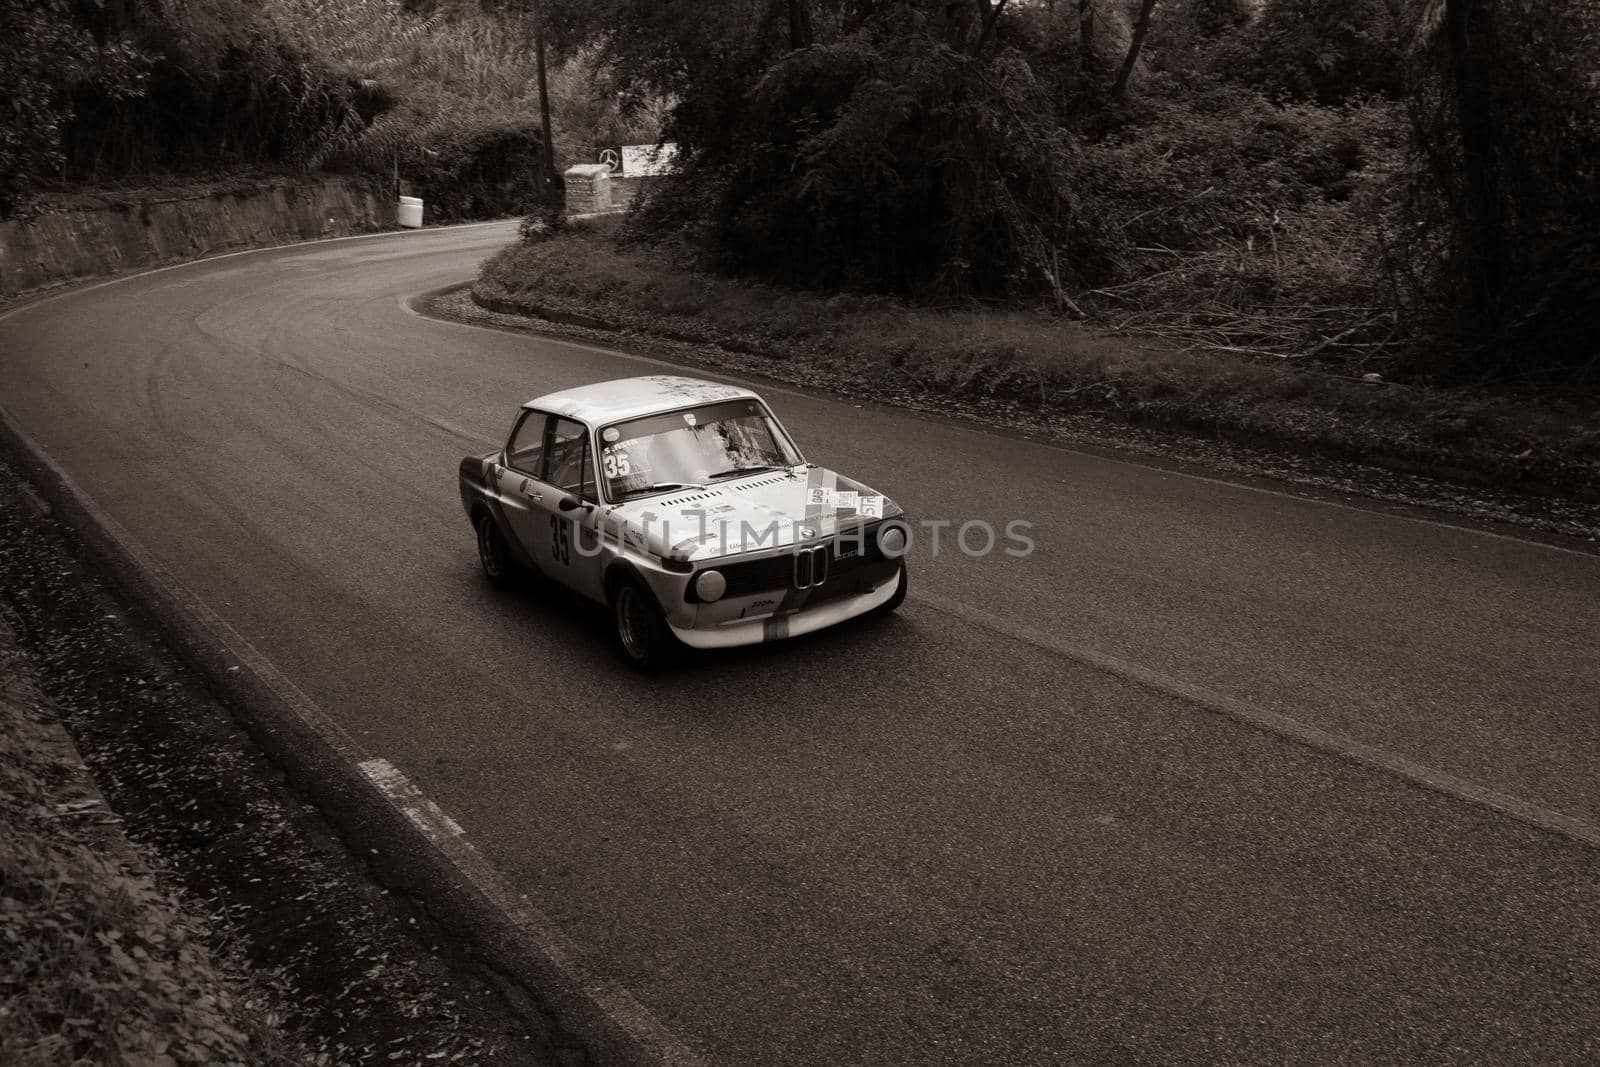 PESARO COLLE SAN BARTOLO , ITALY - OTT 10 - 2021 : BMW 2002 on an old racing car ifor rally